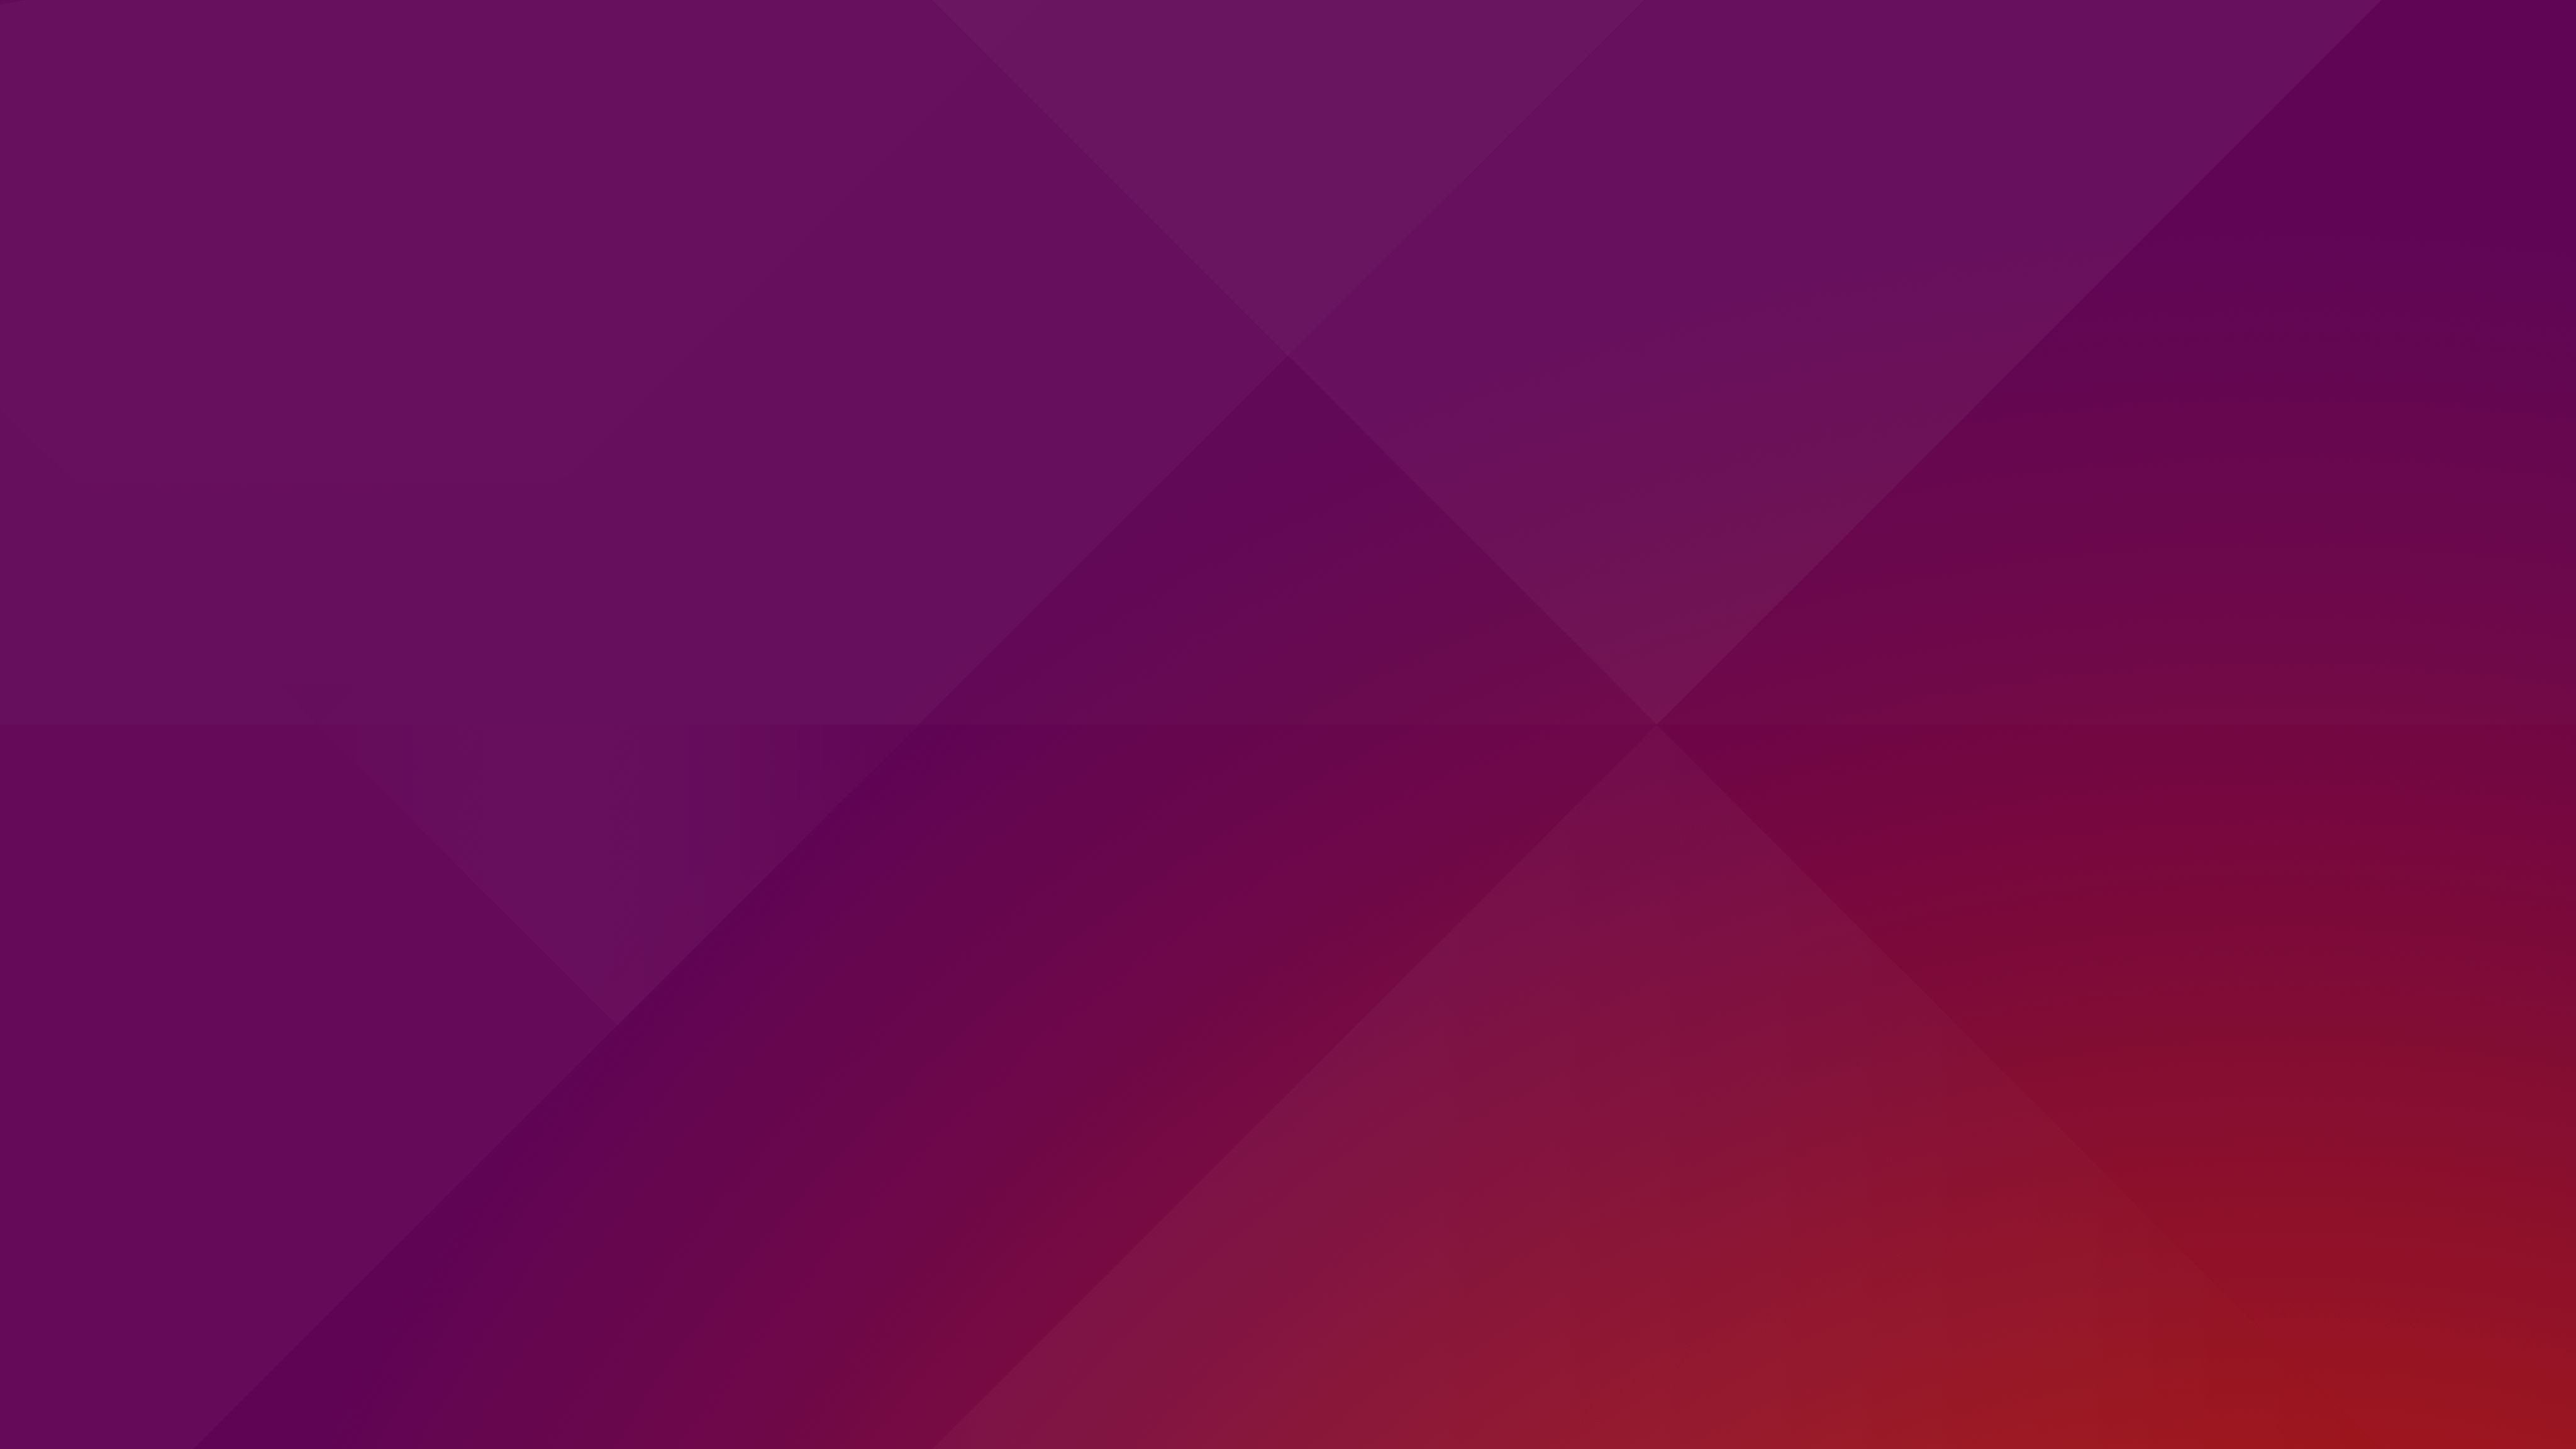 General 4096x2304 Linux Ubuntu minimalism operating system gradient simple background texture